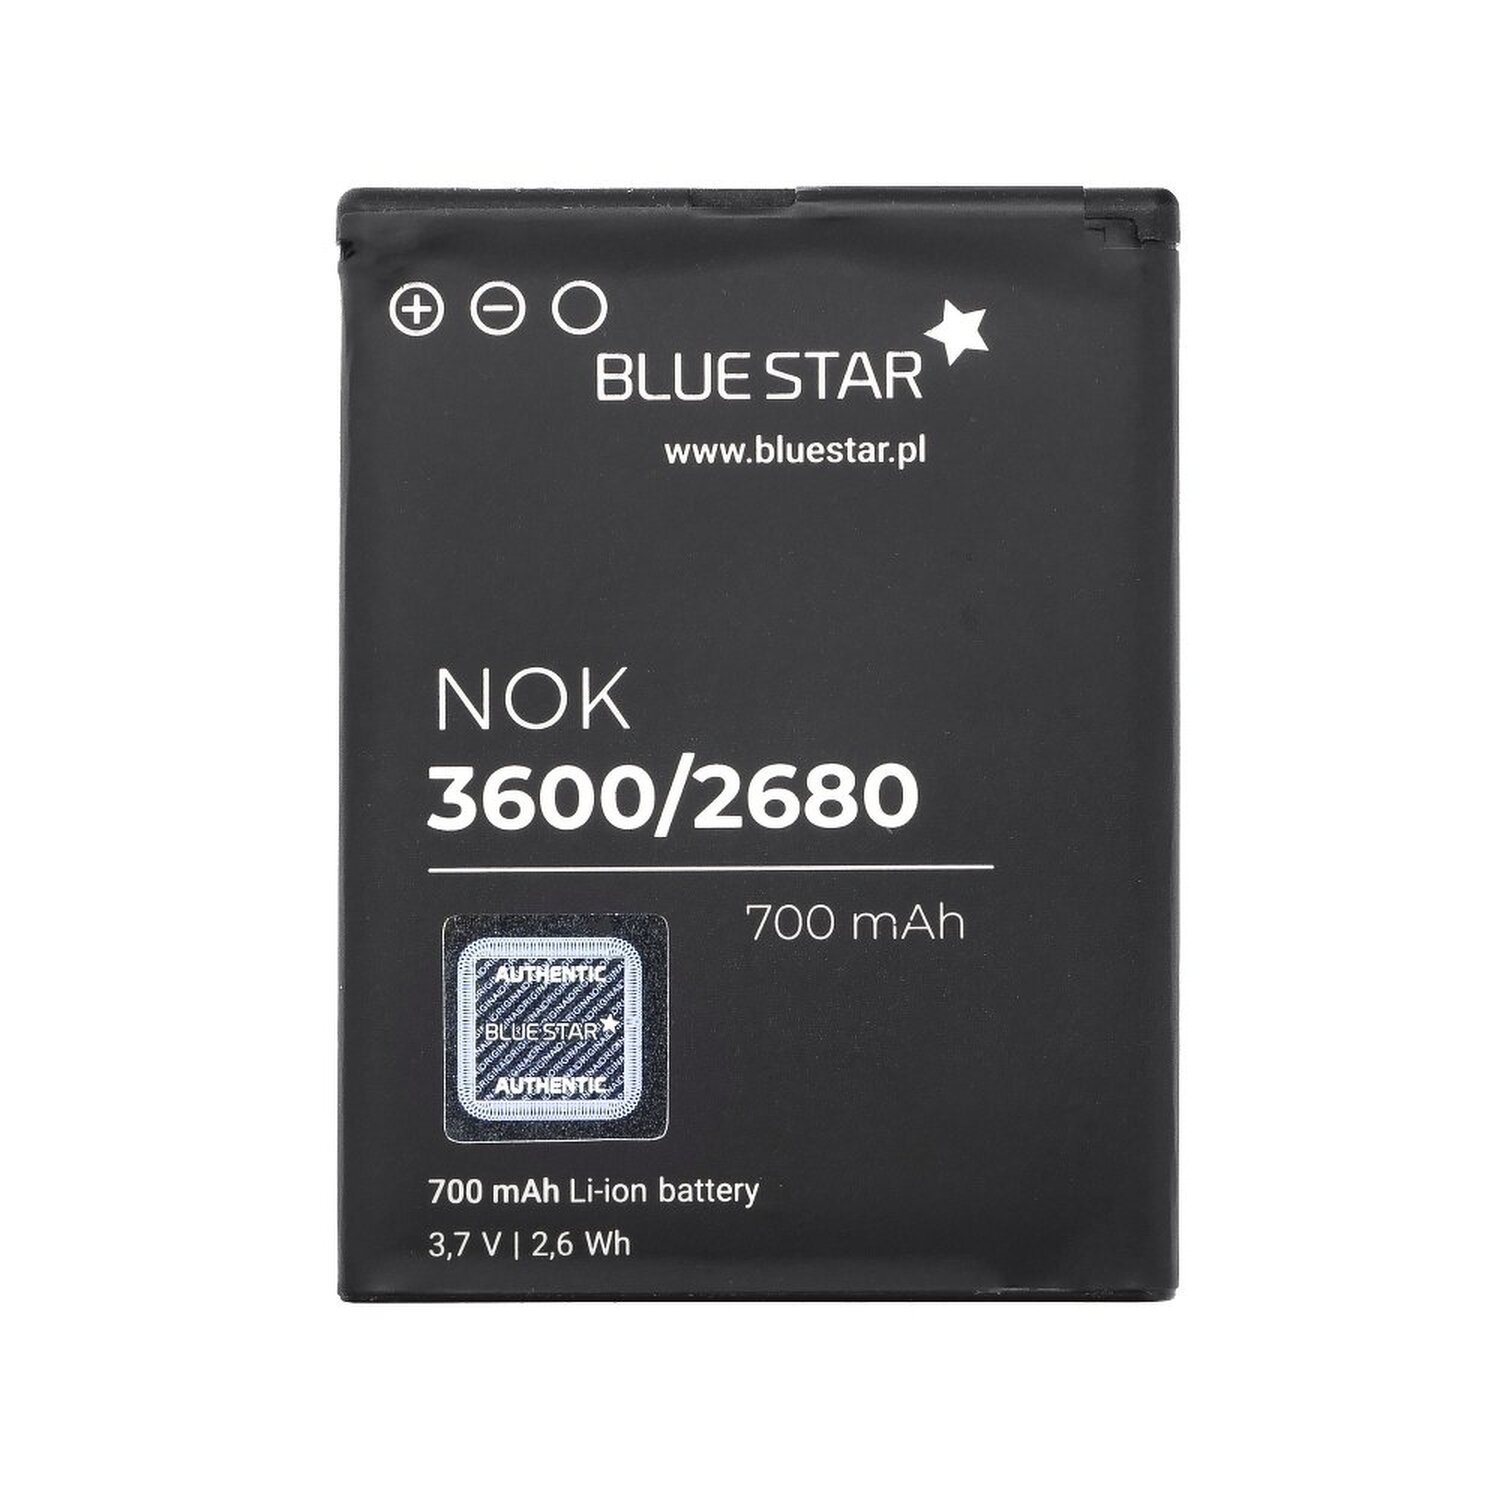 Handyakku Slide Nokia BLUESTAR 3600 Slide / Li-Ion für Akku 2680